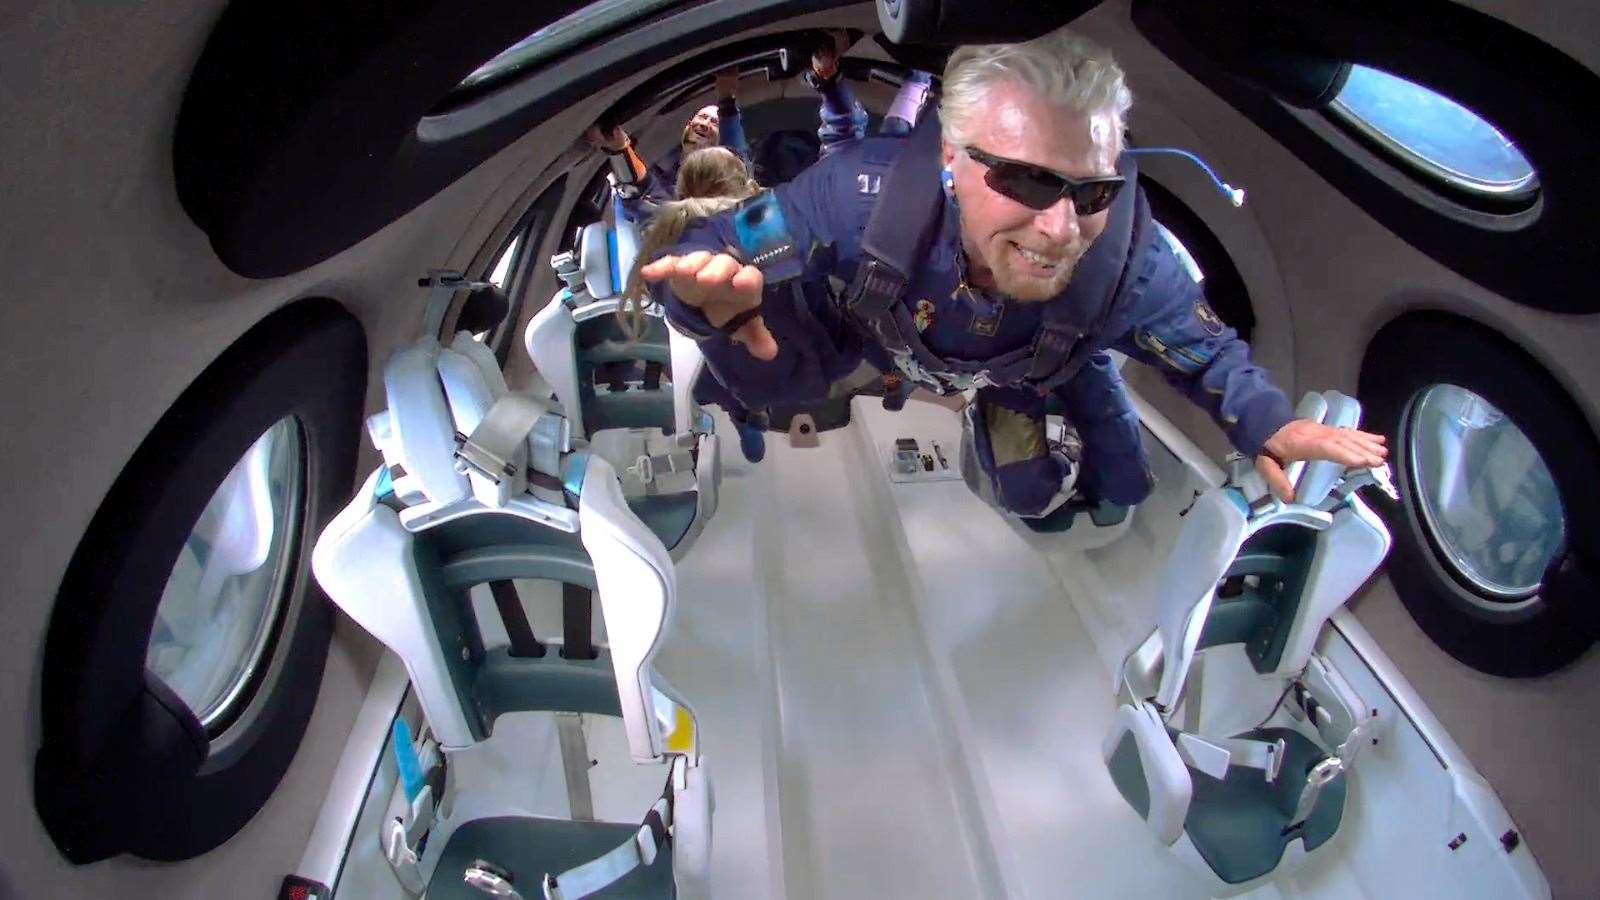 Richard Branson experiences zero gravity in space.